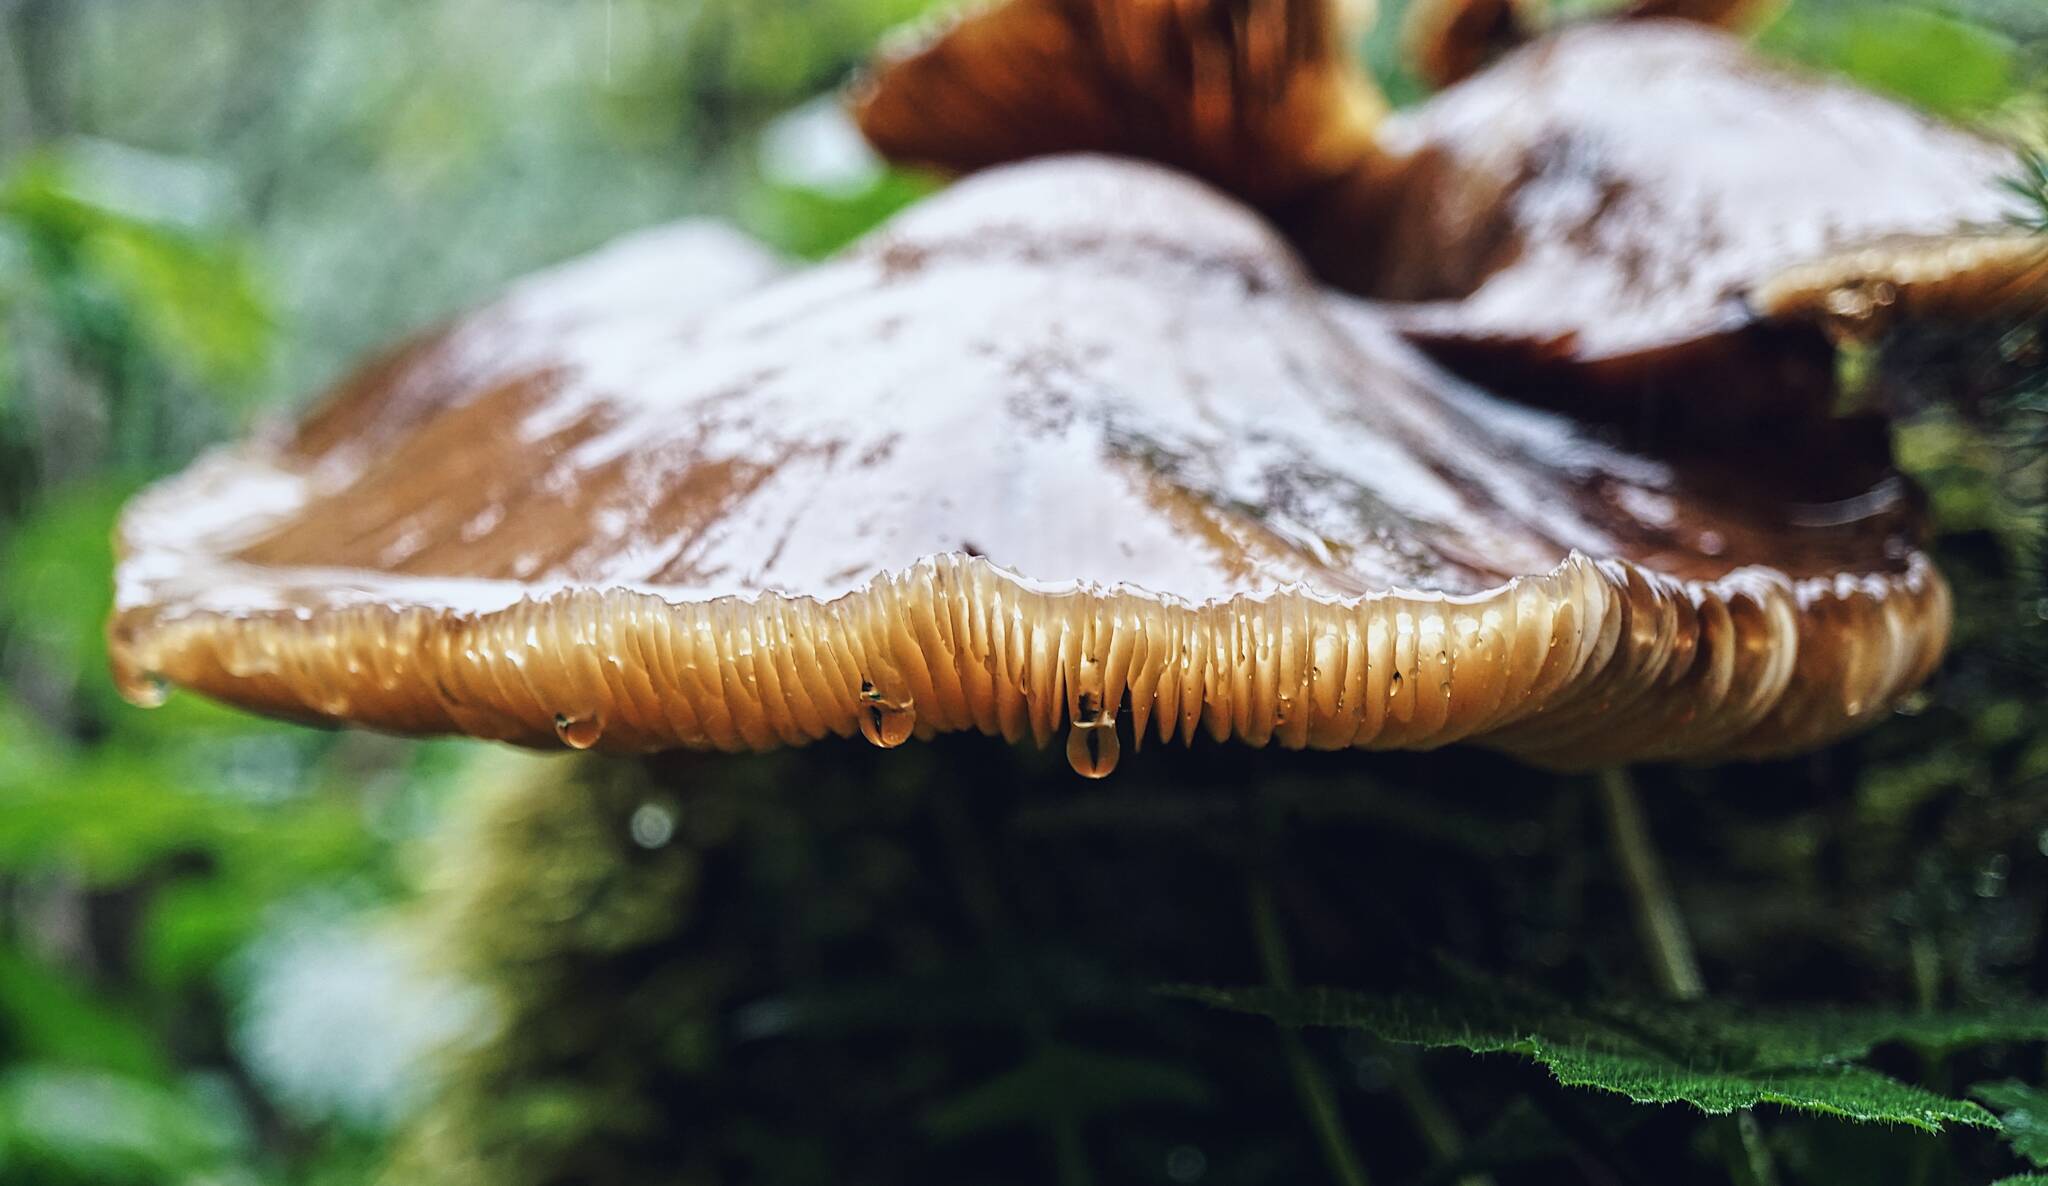 Raindrops on a large mushroom in Hollis. (Courtesy Photo / Marti Crutcher)